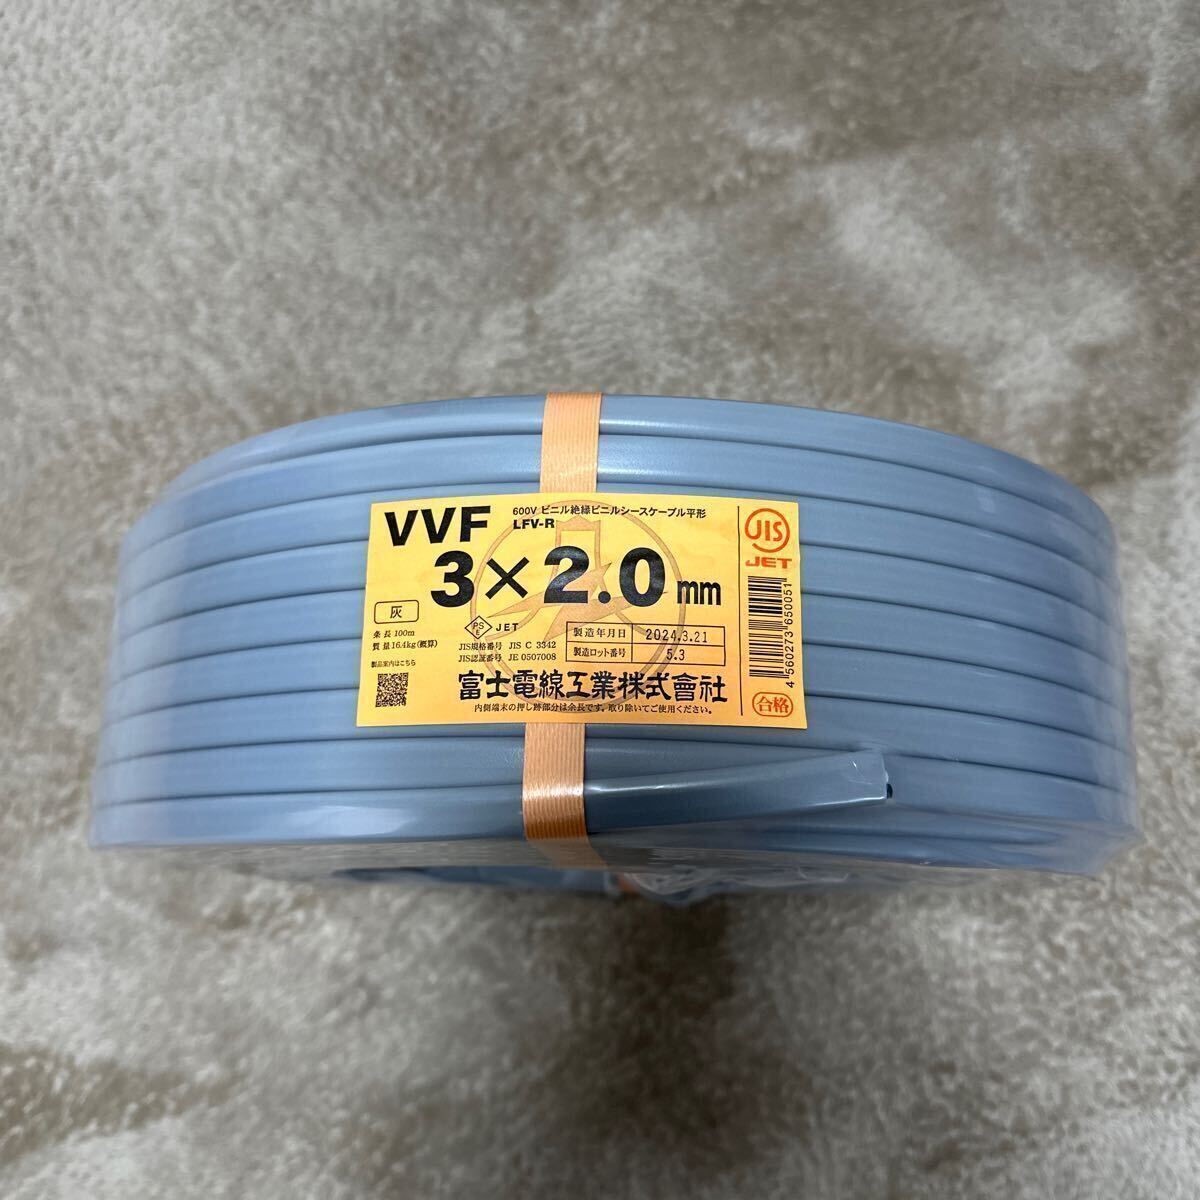  Fuji электрический провод VVF2.0-3C 1 шт (100m)